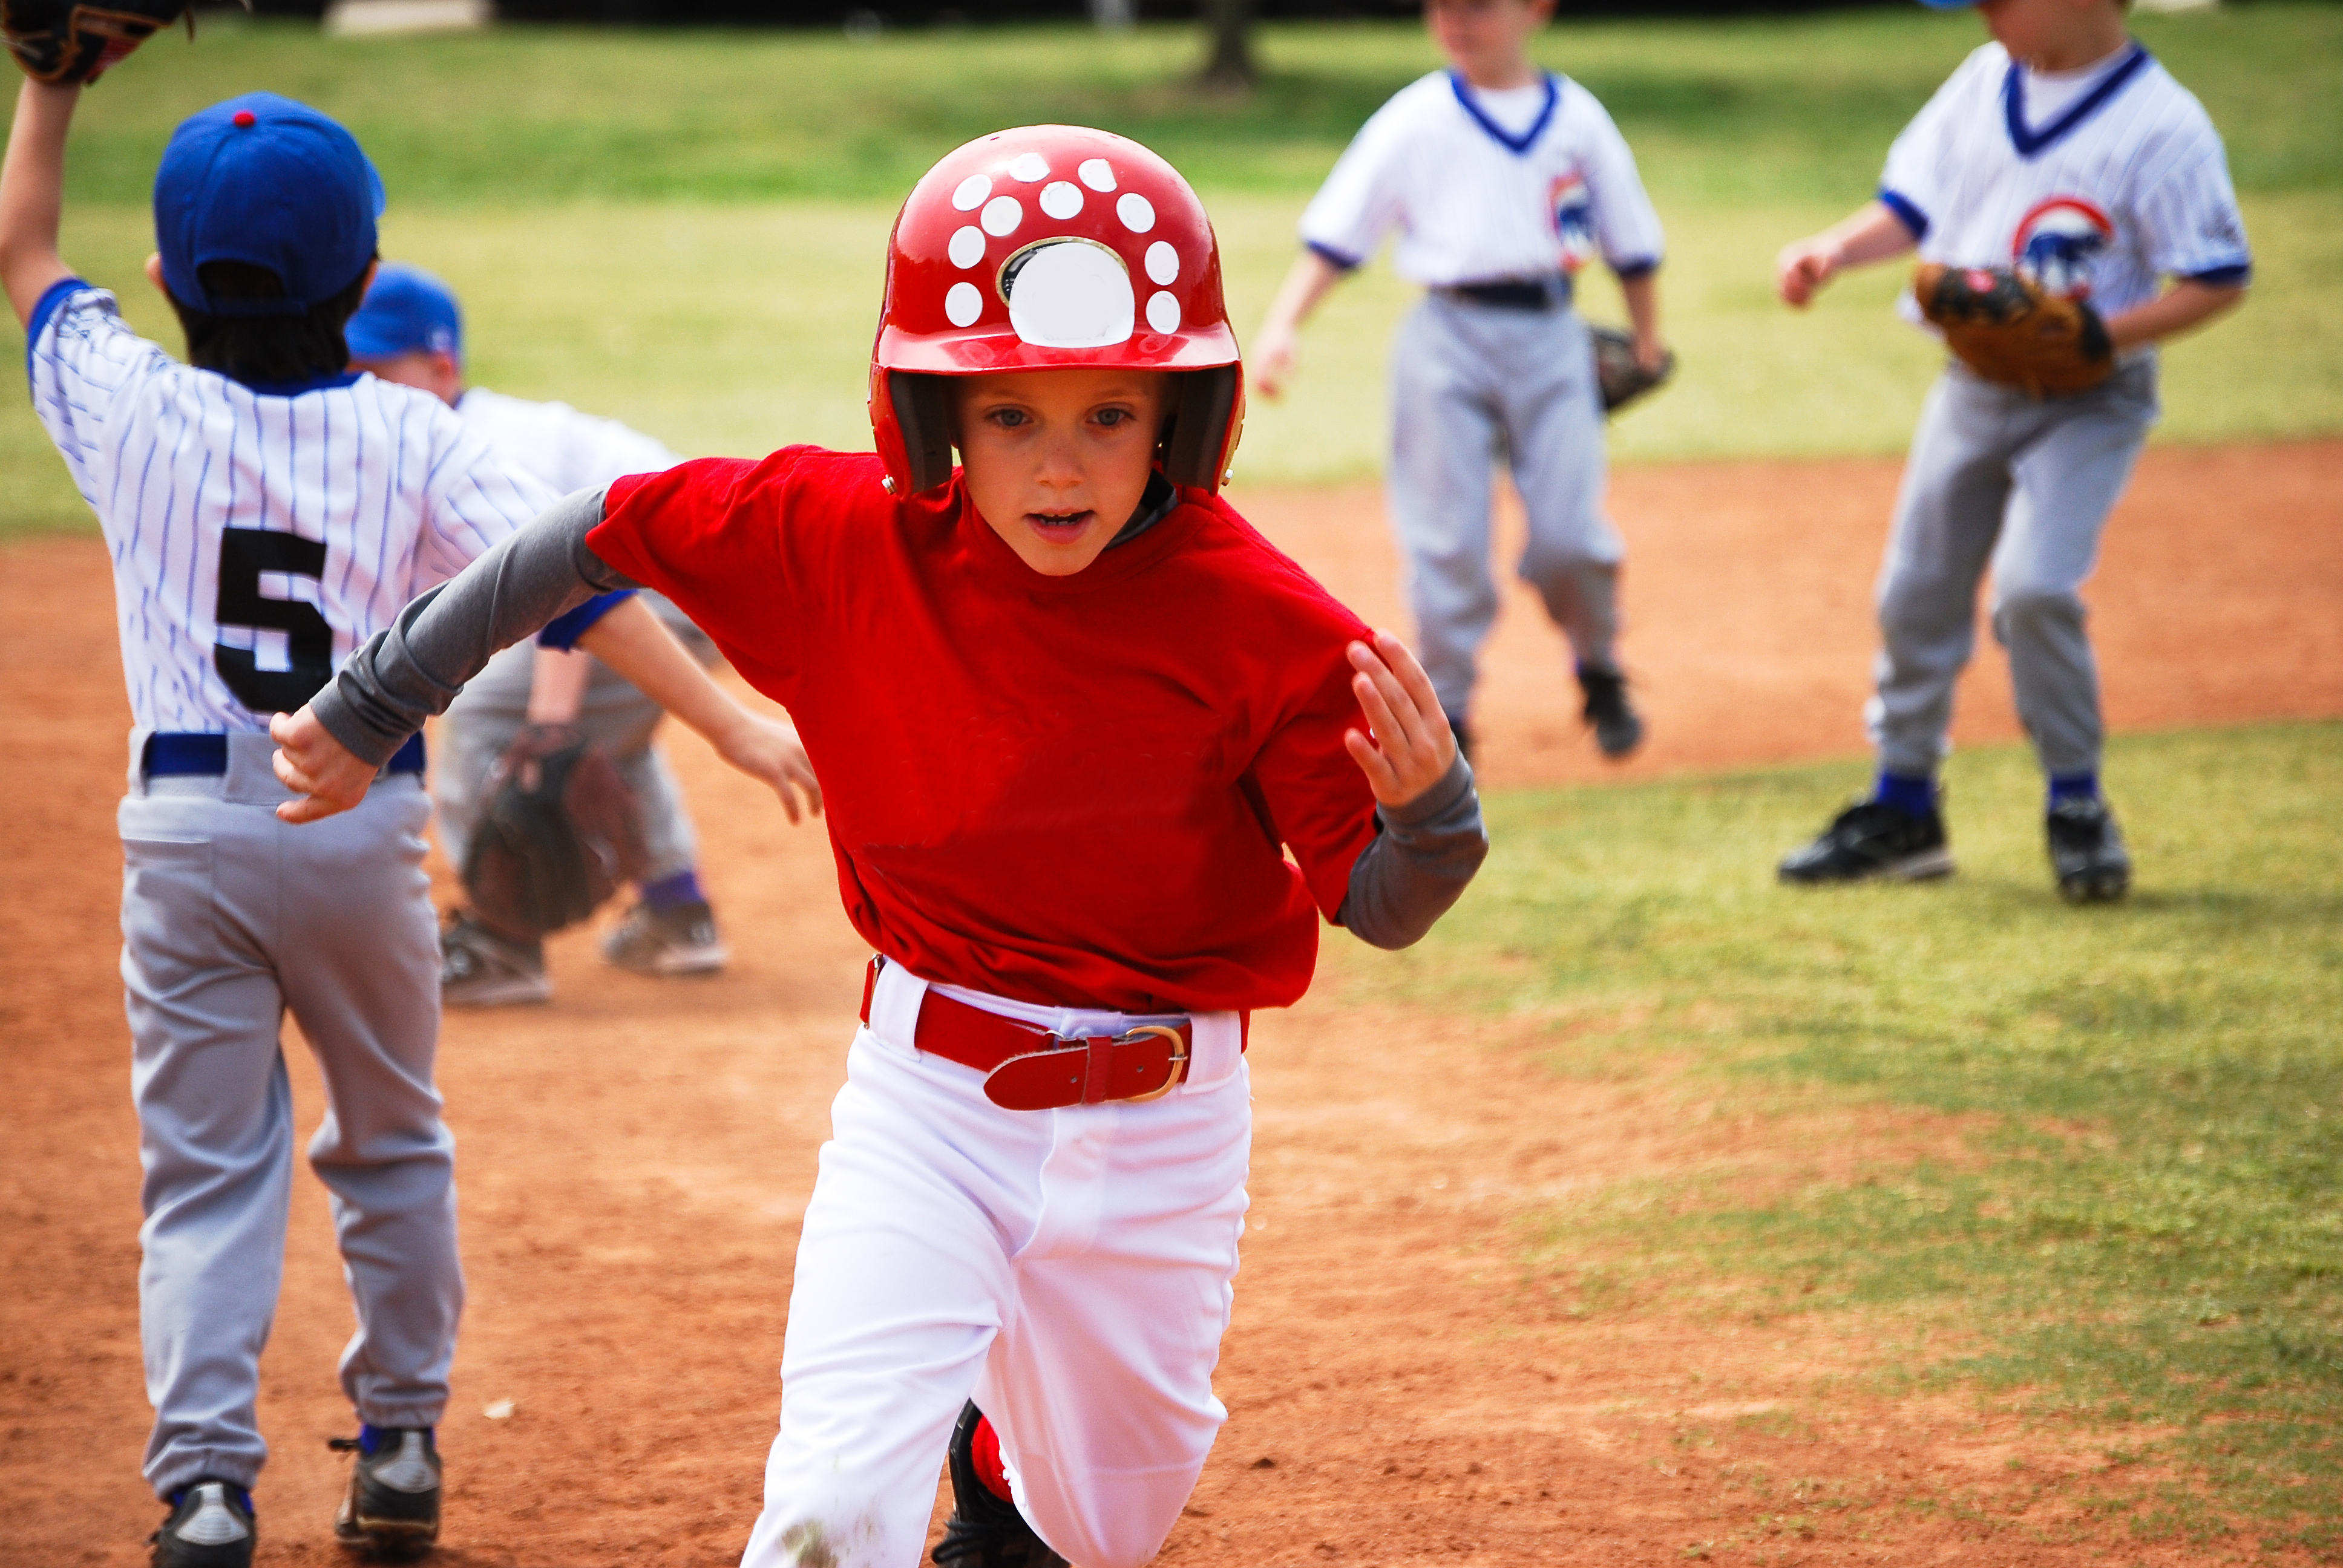 little league baseball player rounding 3rd base.